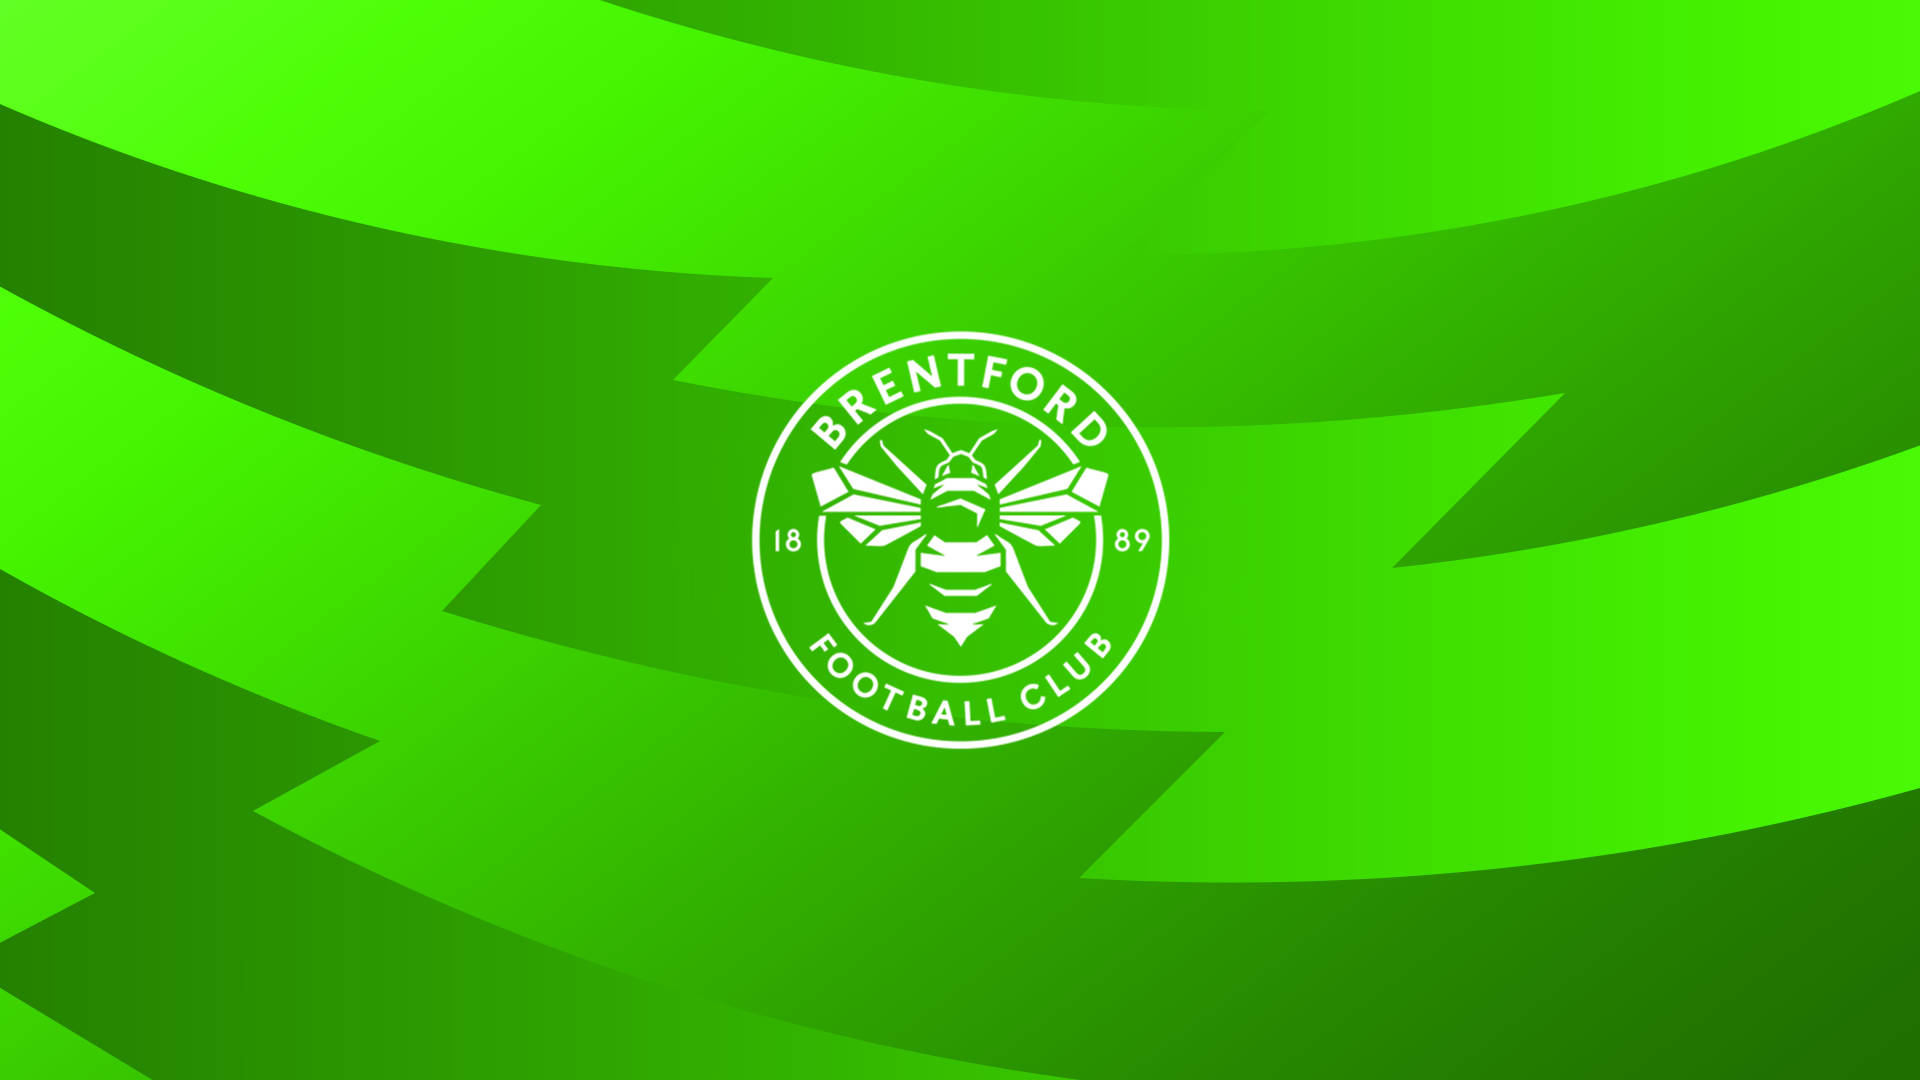 Brentford FC In Green Gradient Wallpaper